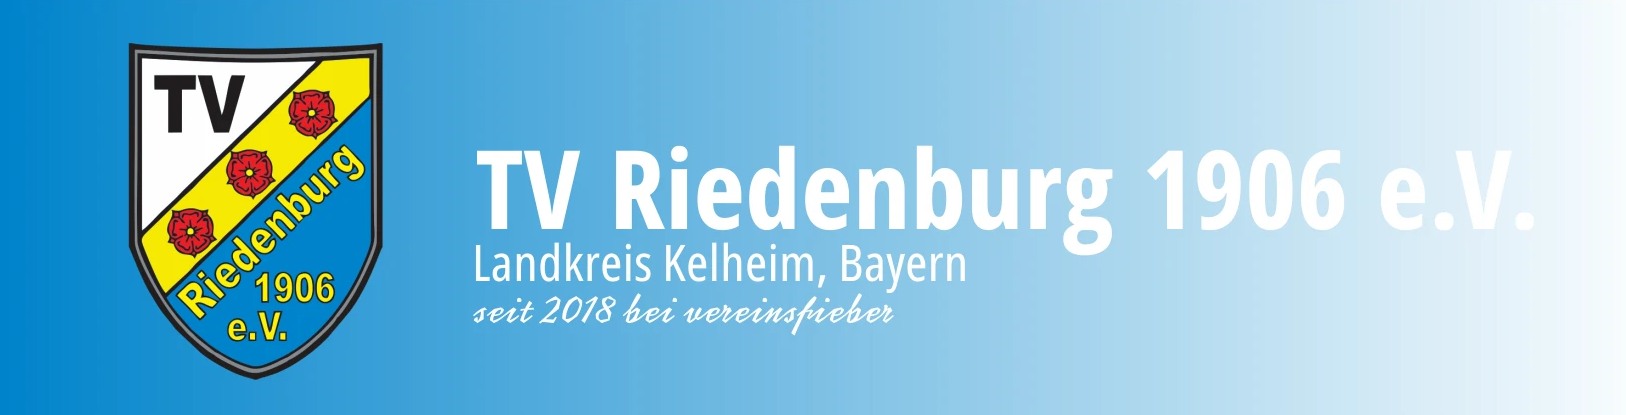 TV Riedenburg Title Image